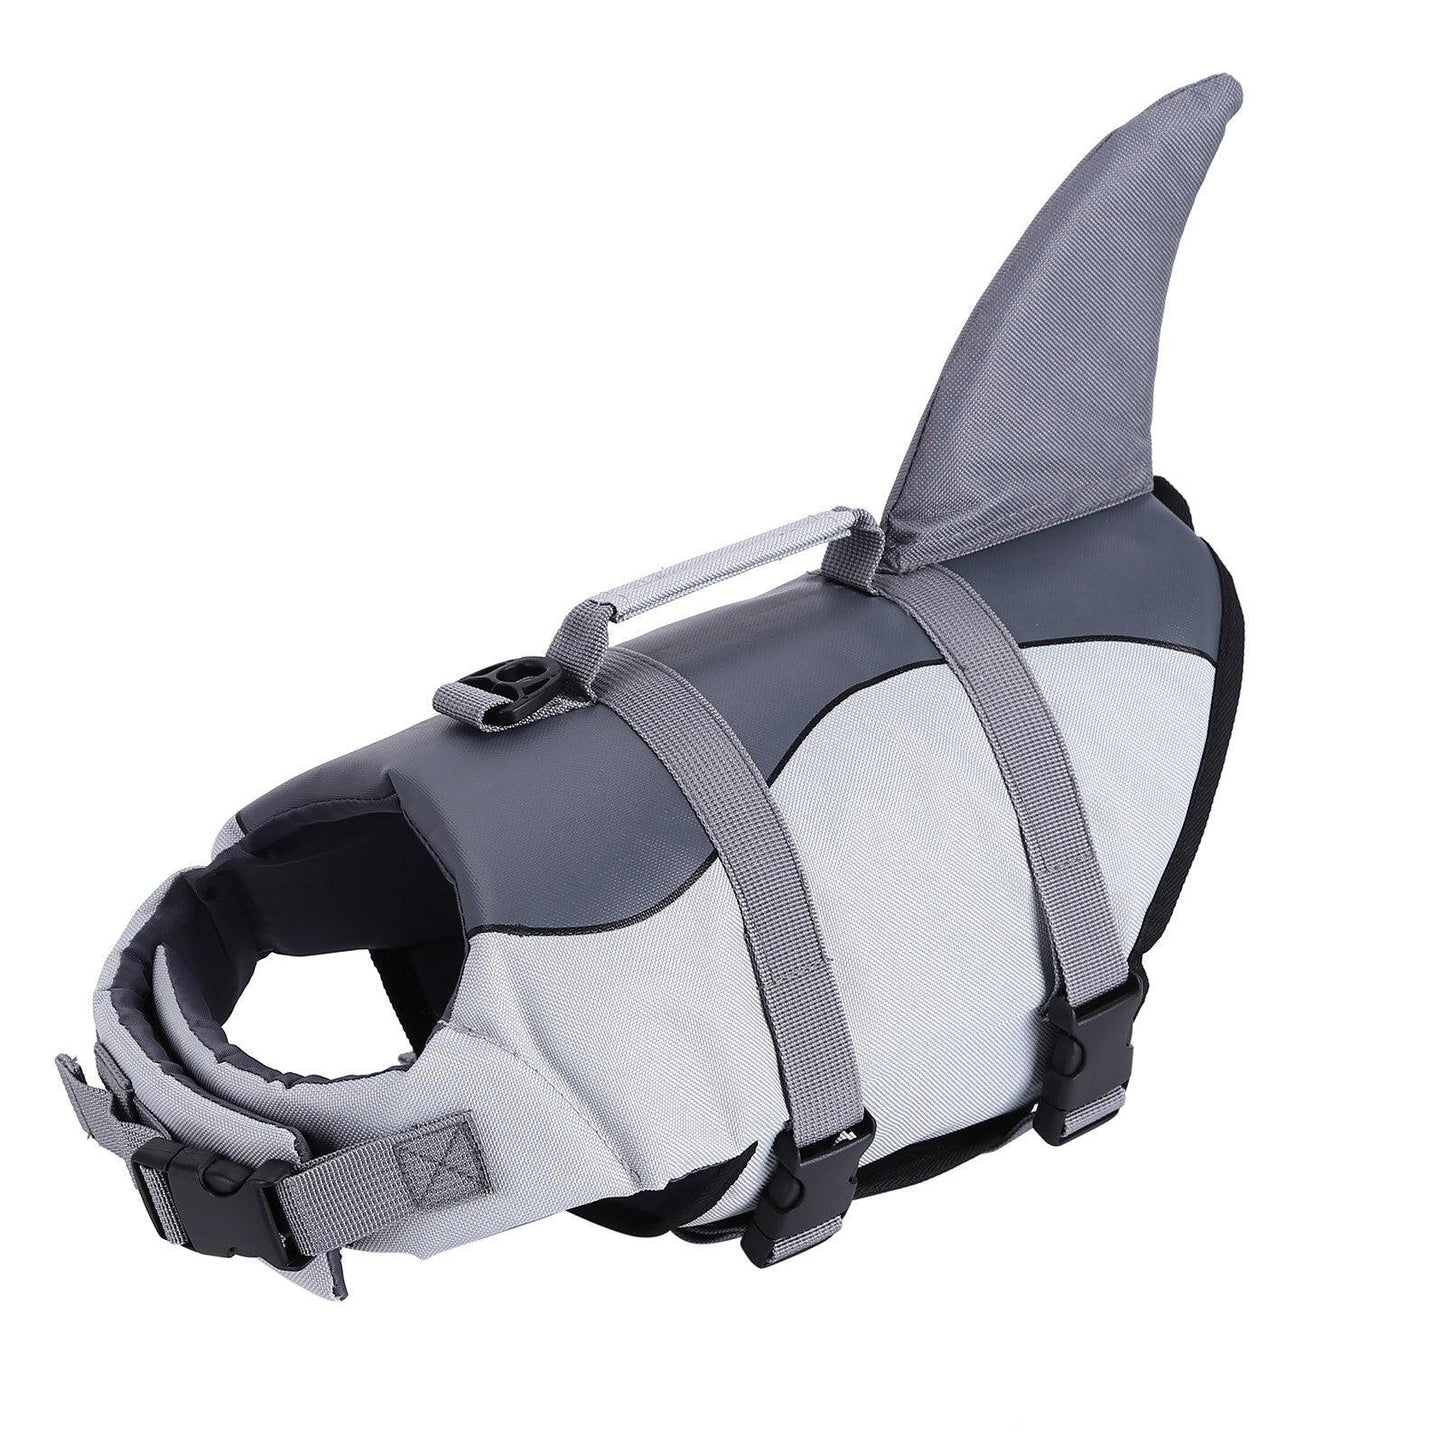 Shark life vest for dogs